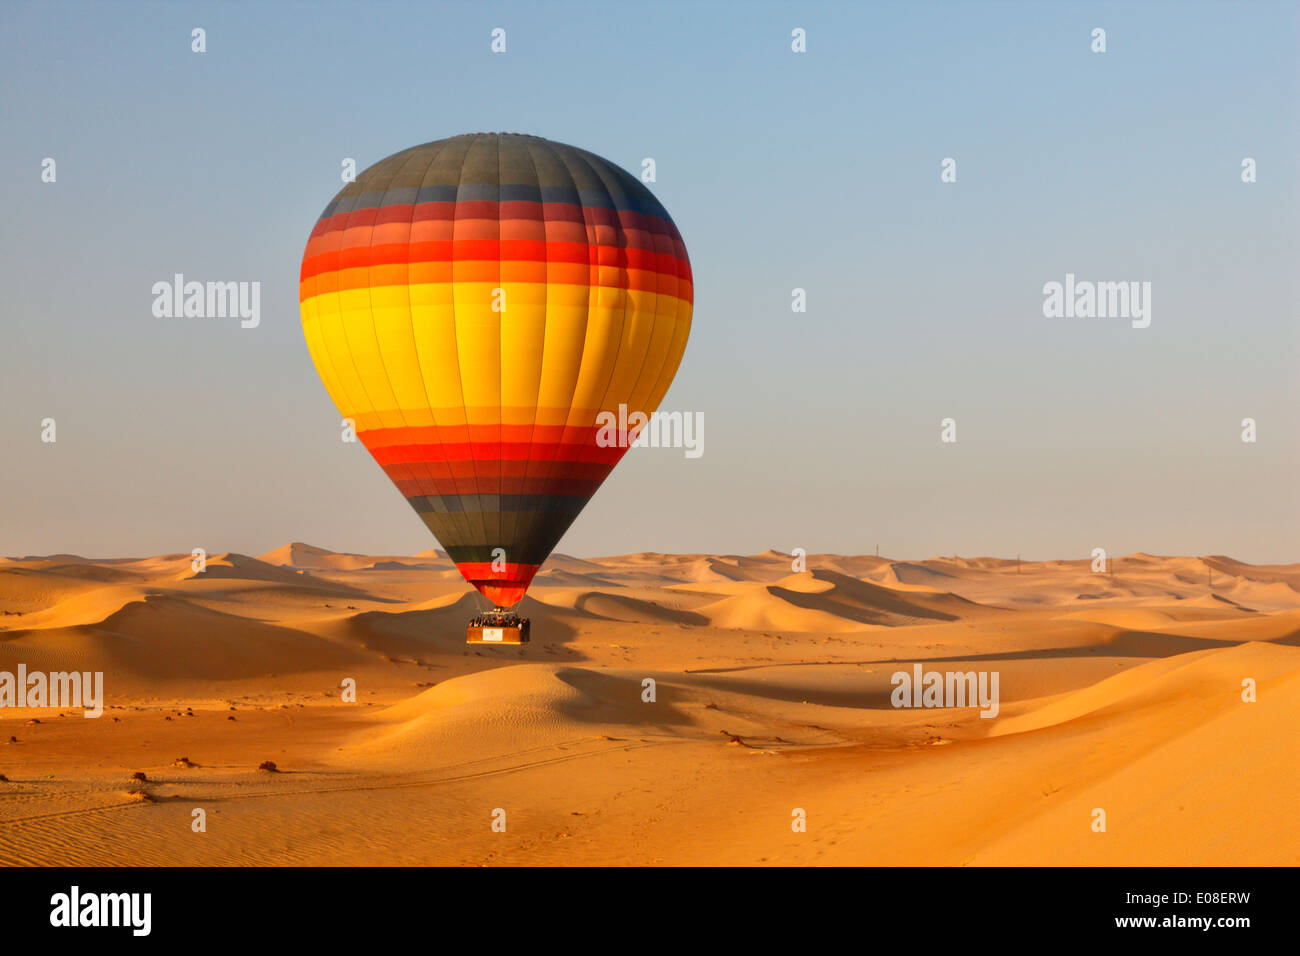 Fly over Dubai desert with hot air balloon Stock Photo